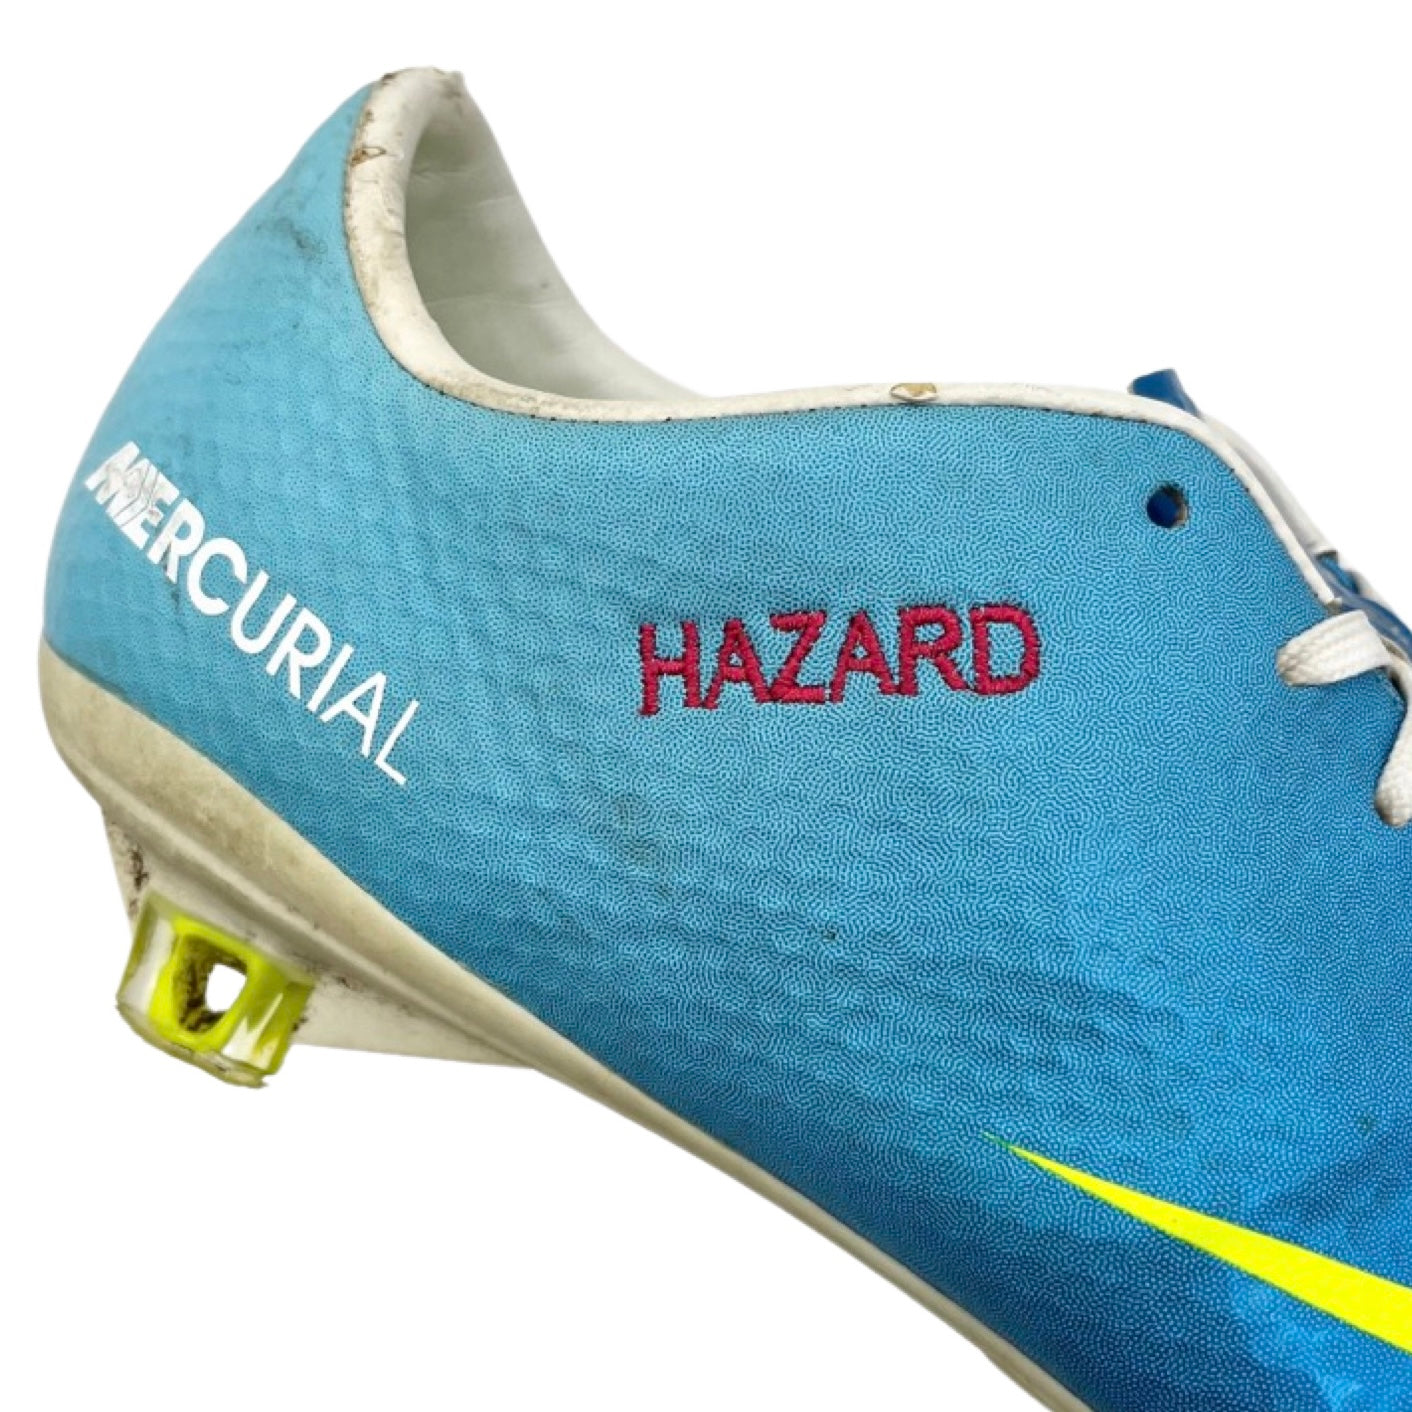 Eden Hazard Match Worn Nike Mercurial Vapor IX